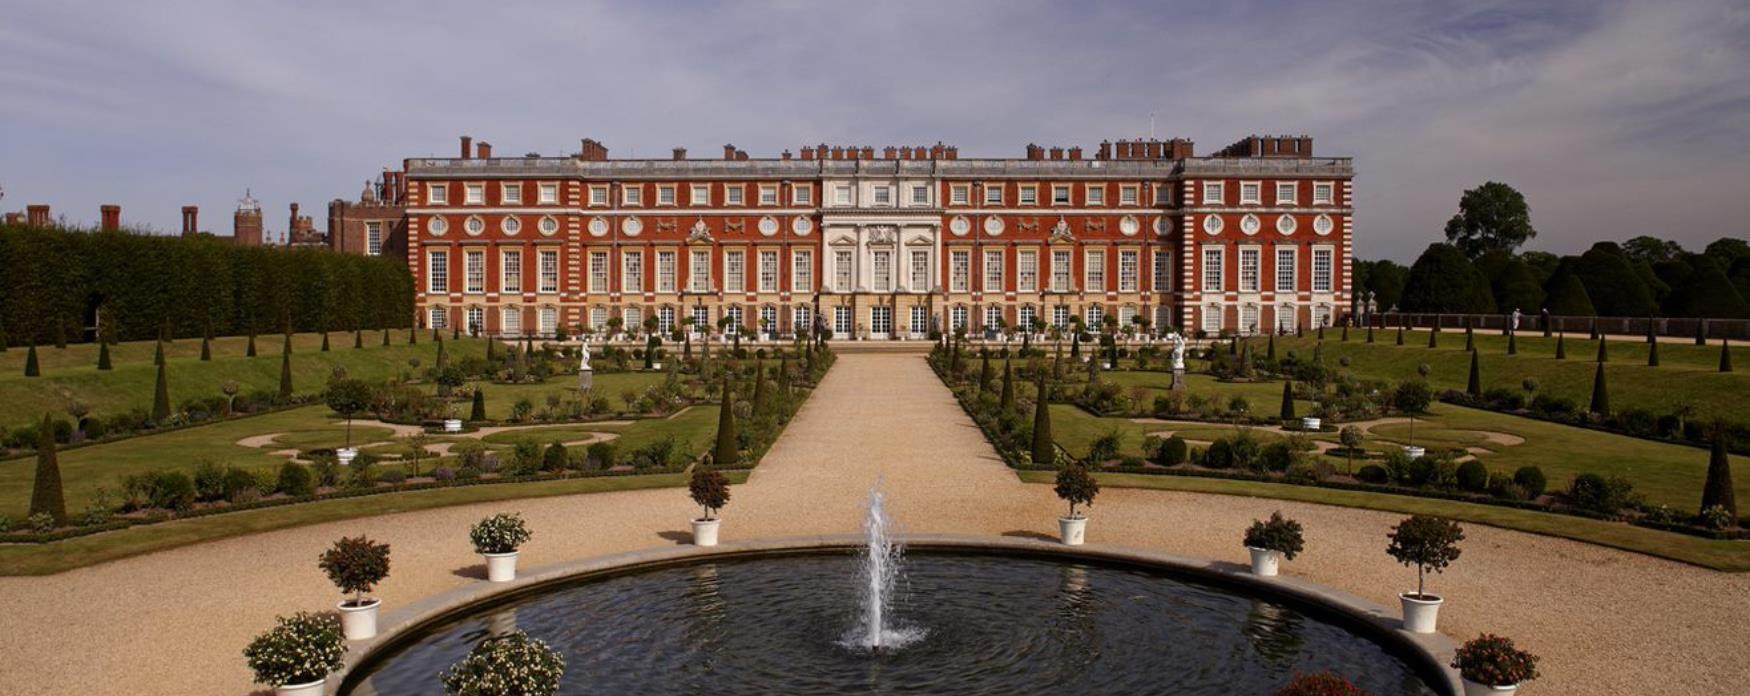 RMD - Hampton Court Palace